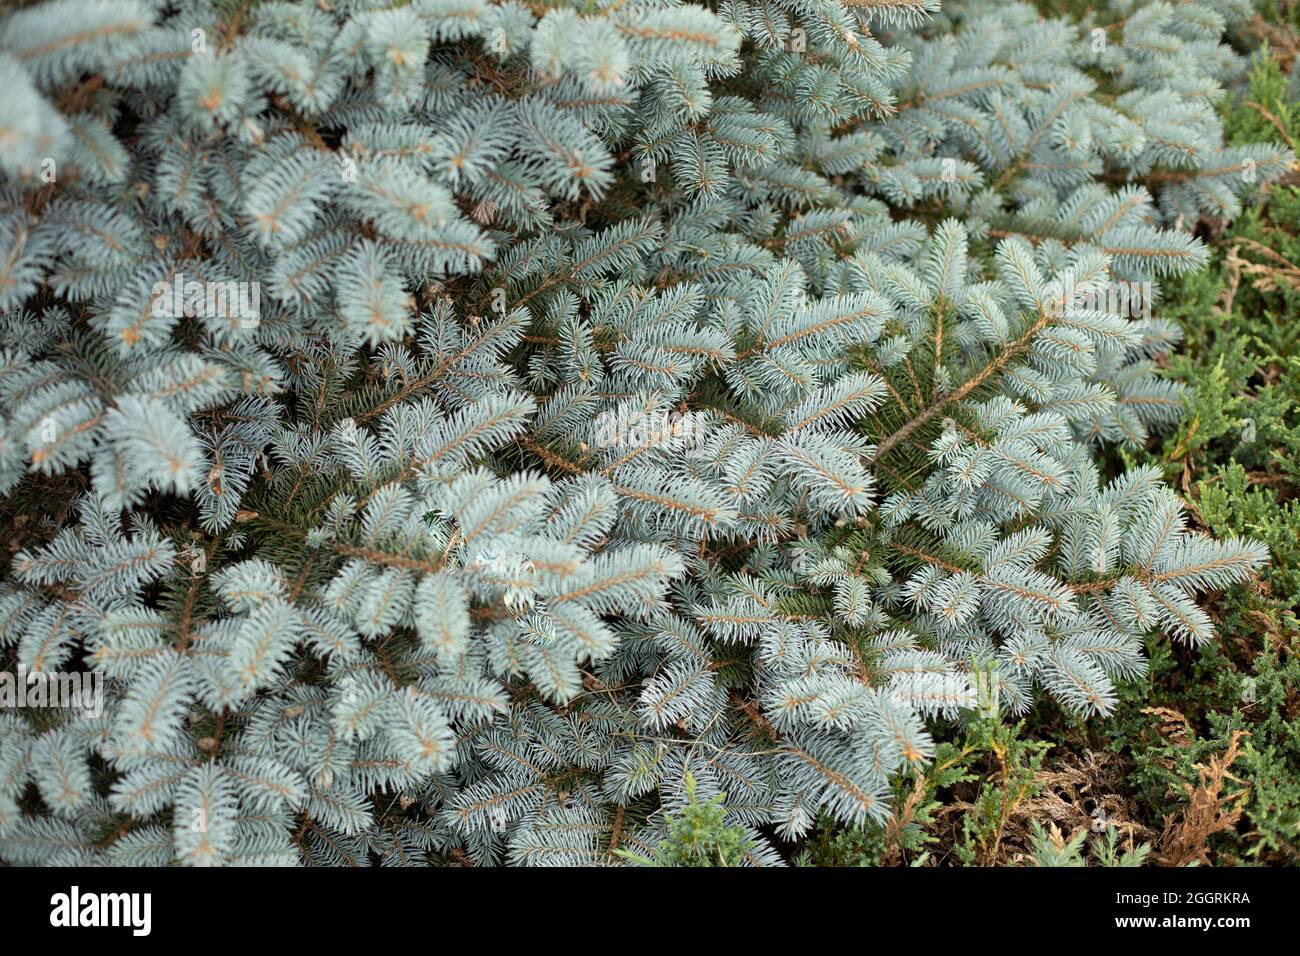 Coniferous plant in the garden. Garden pine. Miniature spruce tree. Pine needles background. Stock Photo